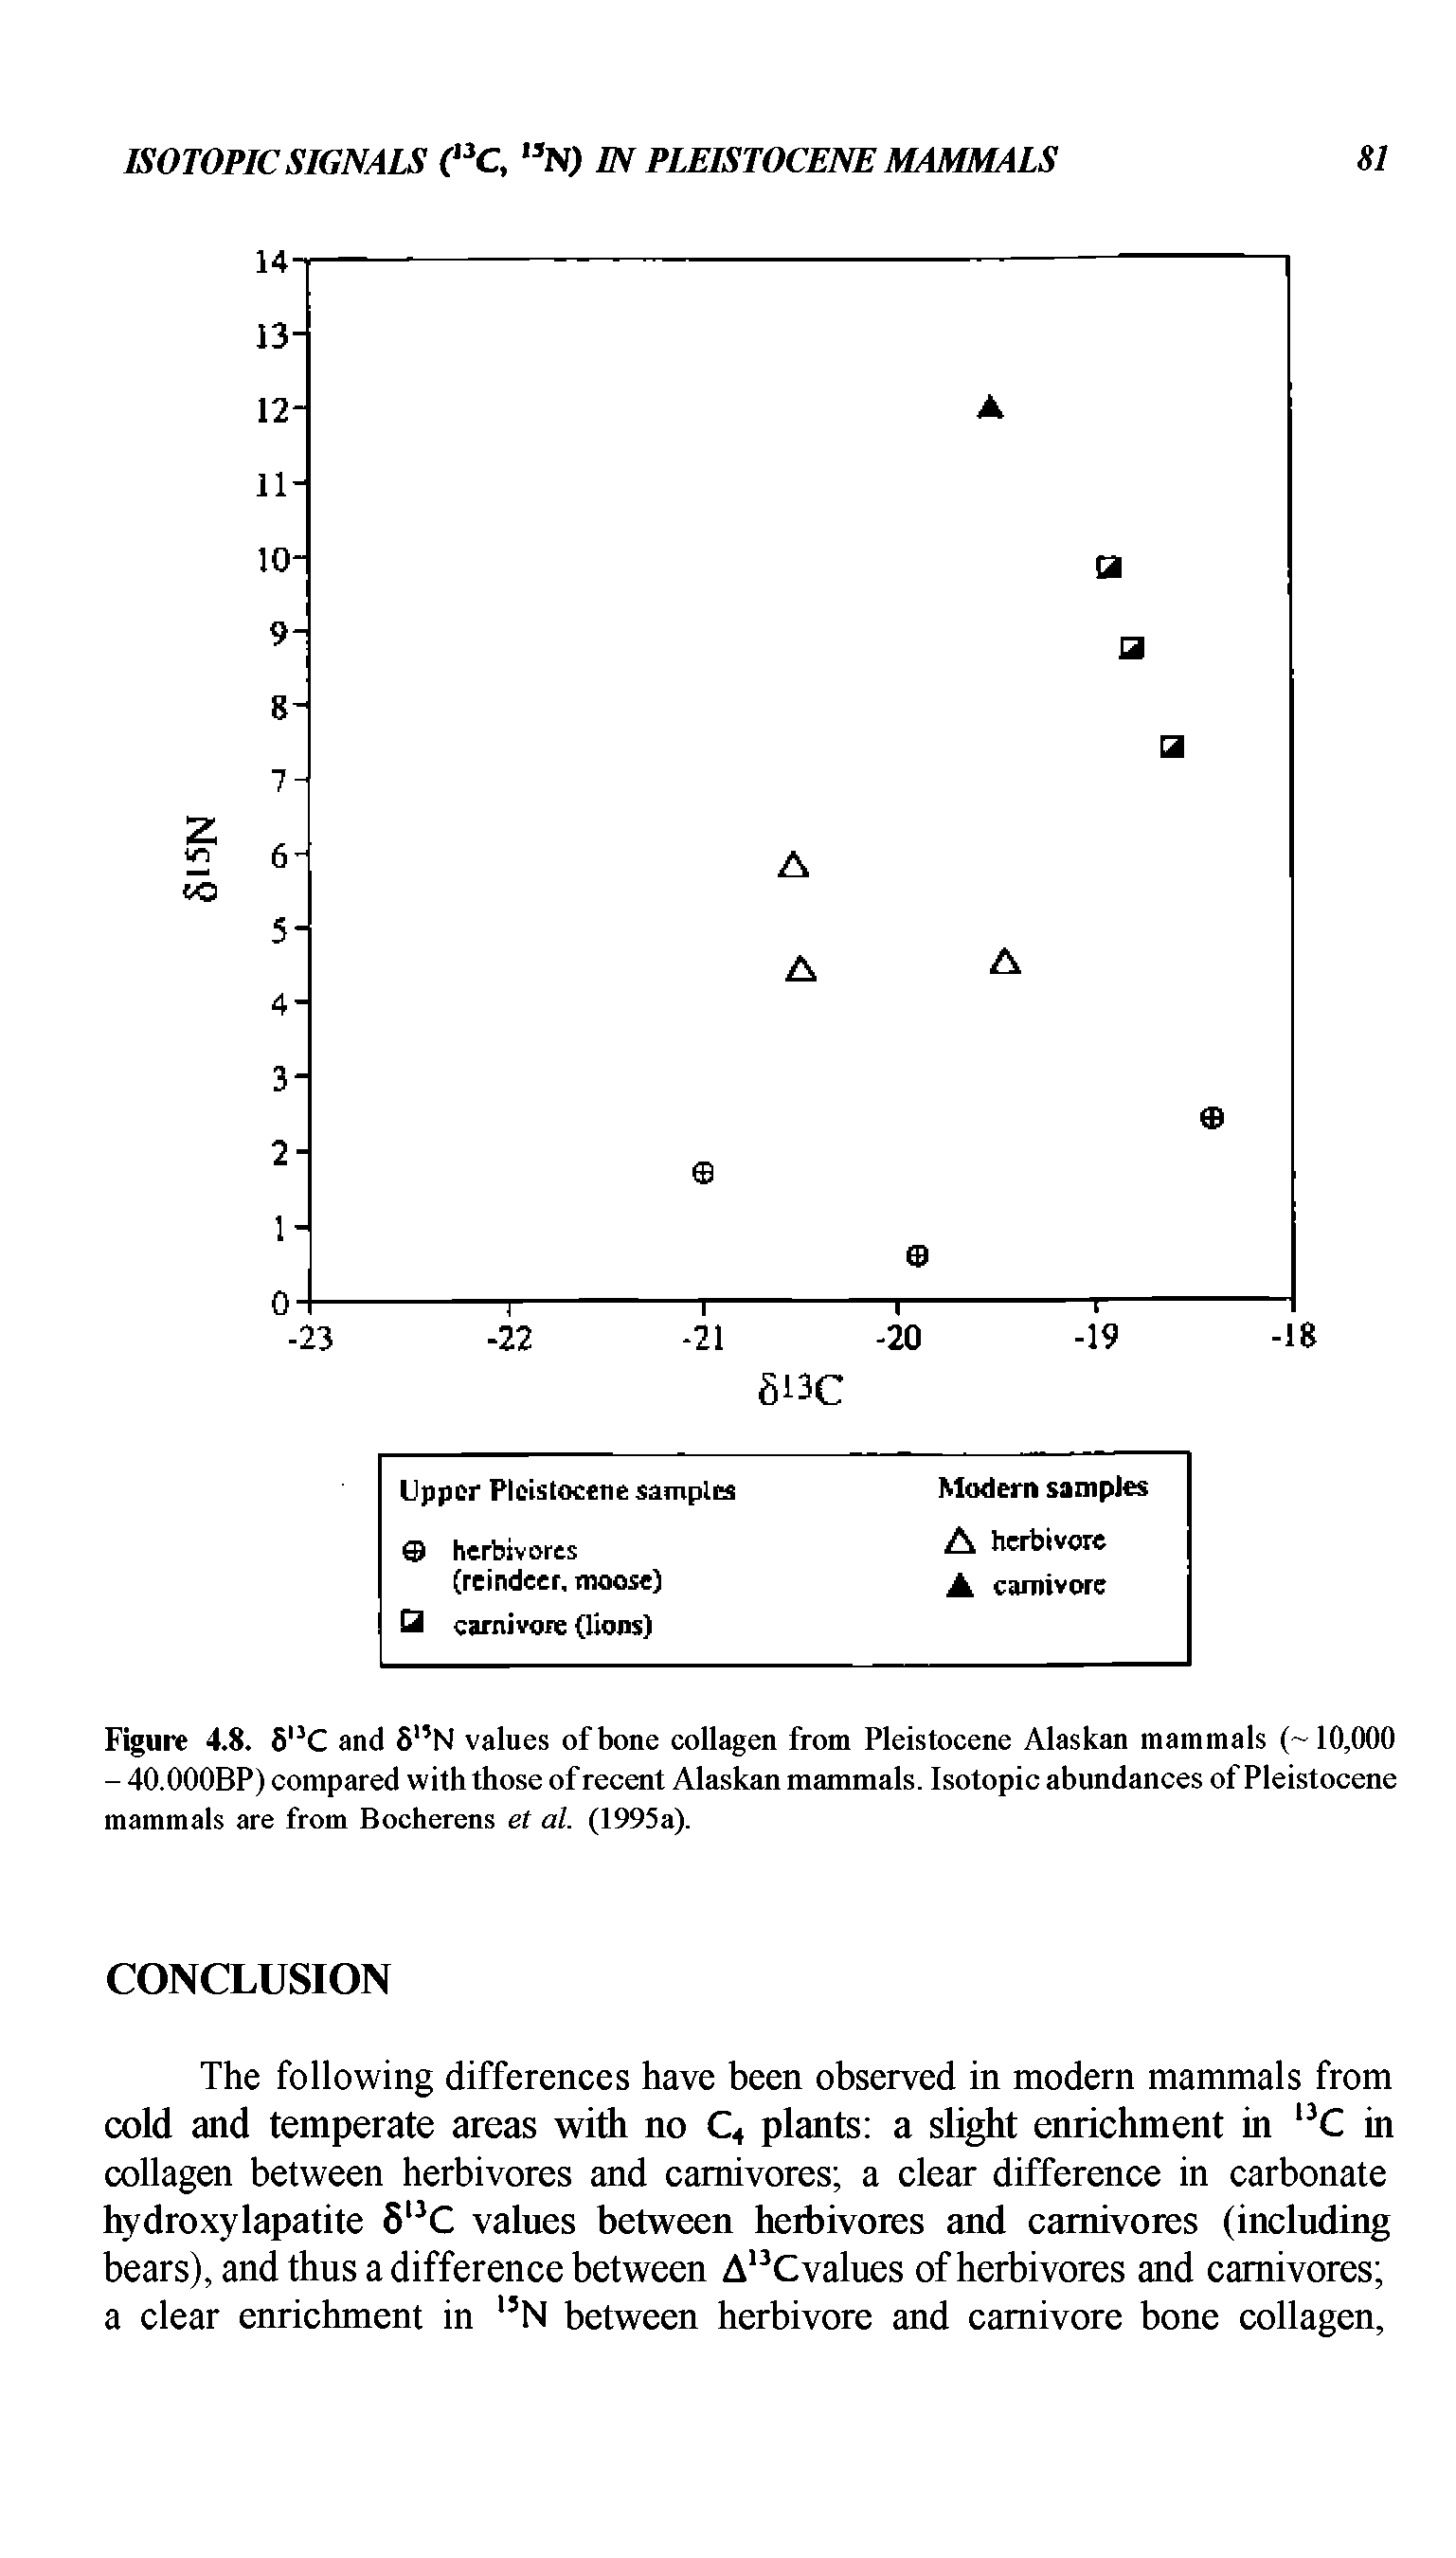 Figure 4.8. 6 C and 8 N values of bone collagen from Pleistocene Alaskan mammals (-10,000 - 40.000BP) compared with those of recent Alaskan mammals. Isotopic abundances of Pleistocene mammals are from Bocherens et al. (1995a).